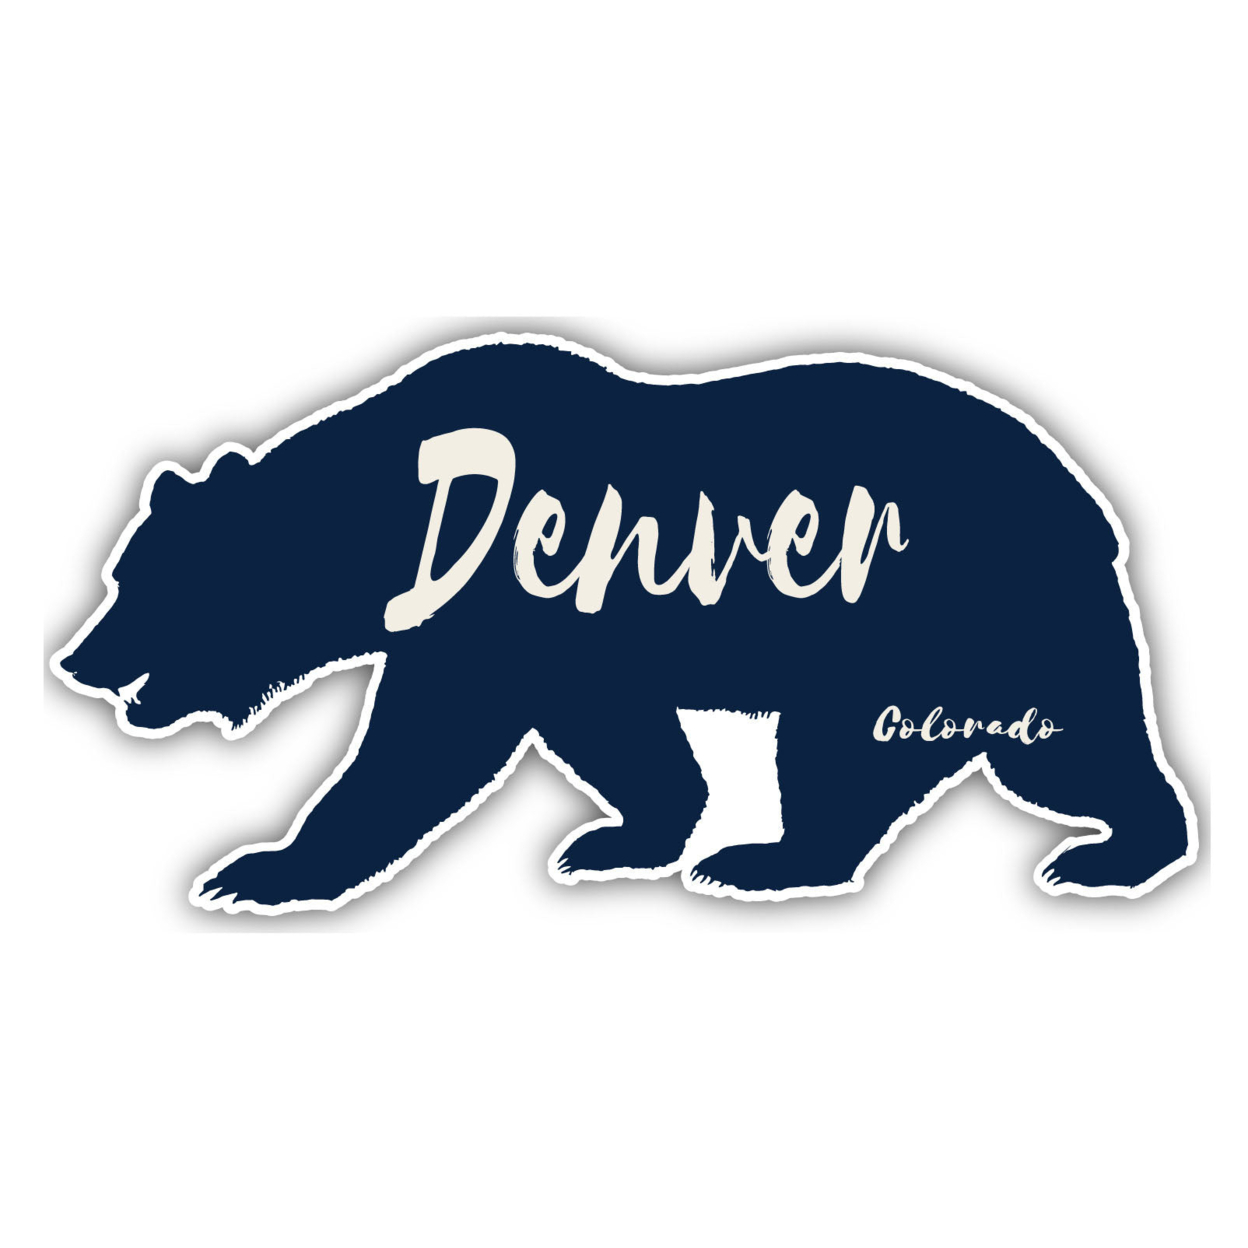 Denver Colorado Souvenir Decorative Stickers (Choose Theme And Size) - 4-Pack, 4-Inch, Tent